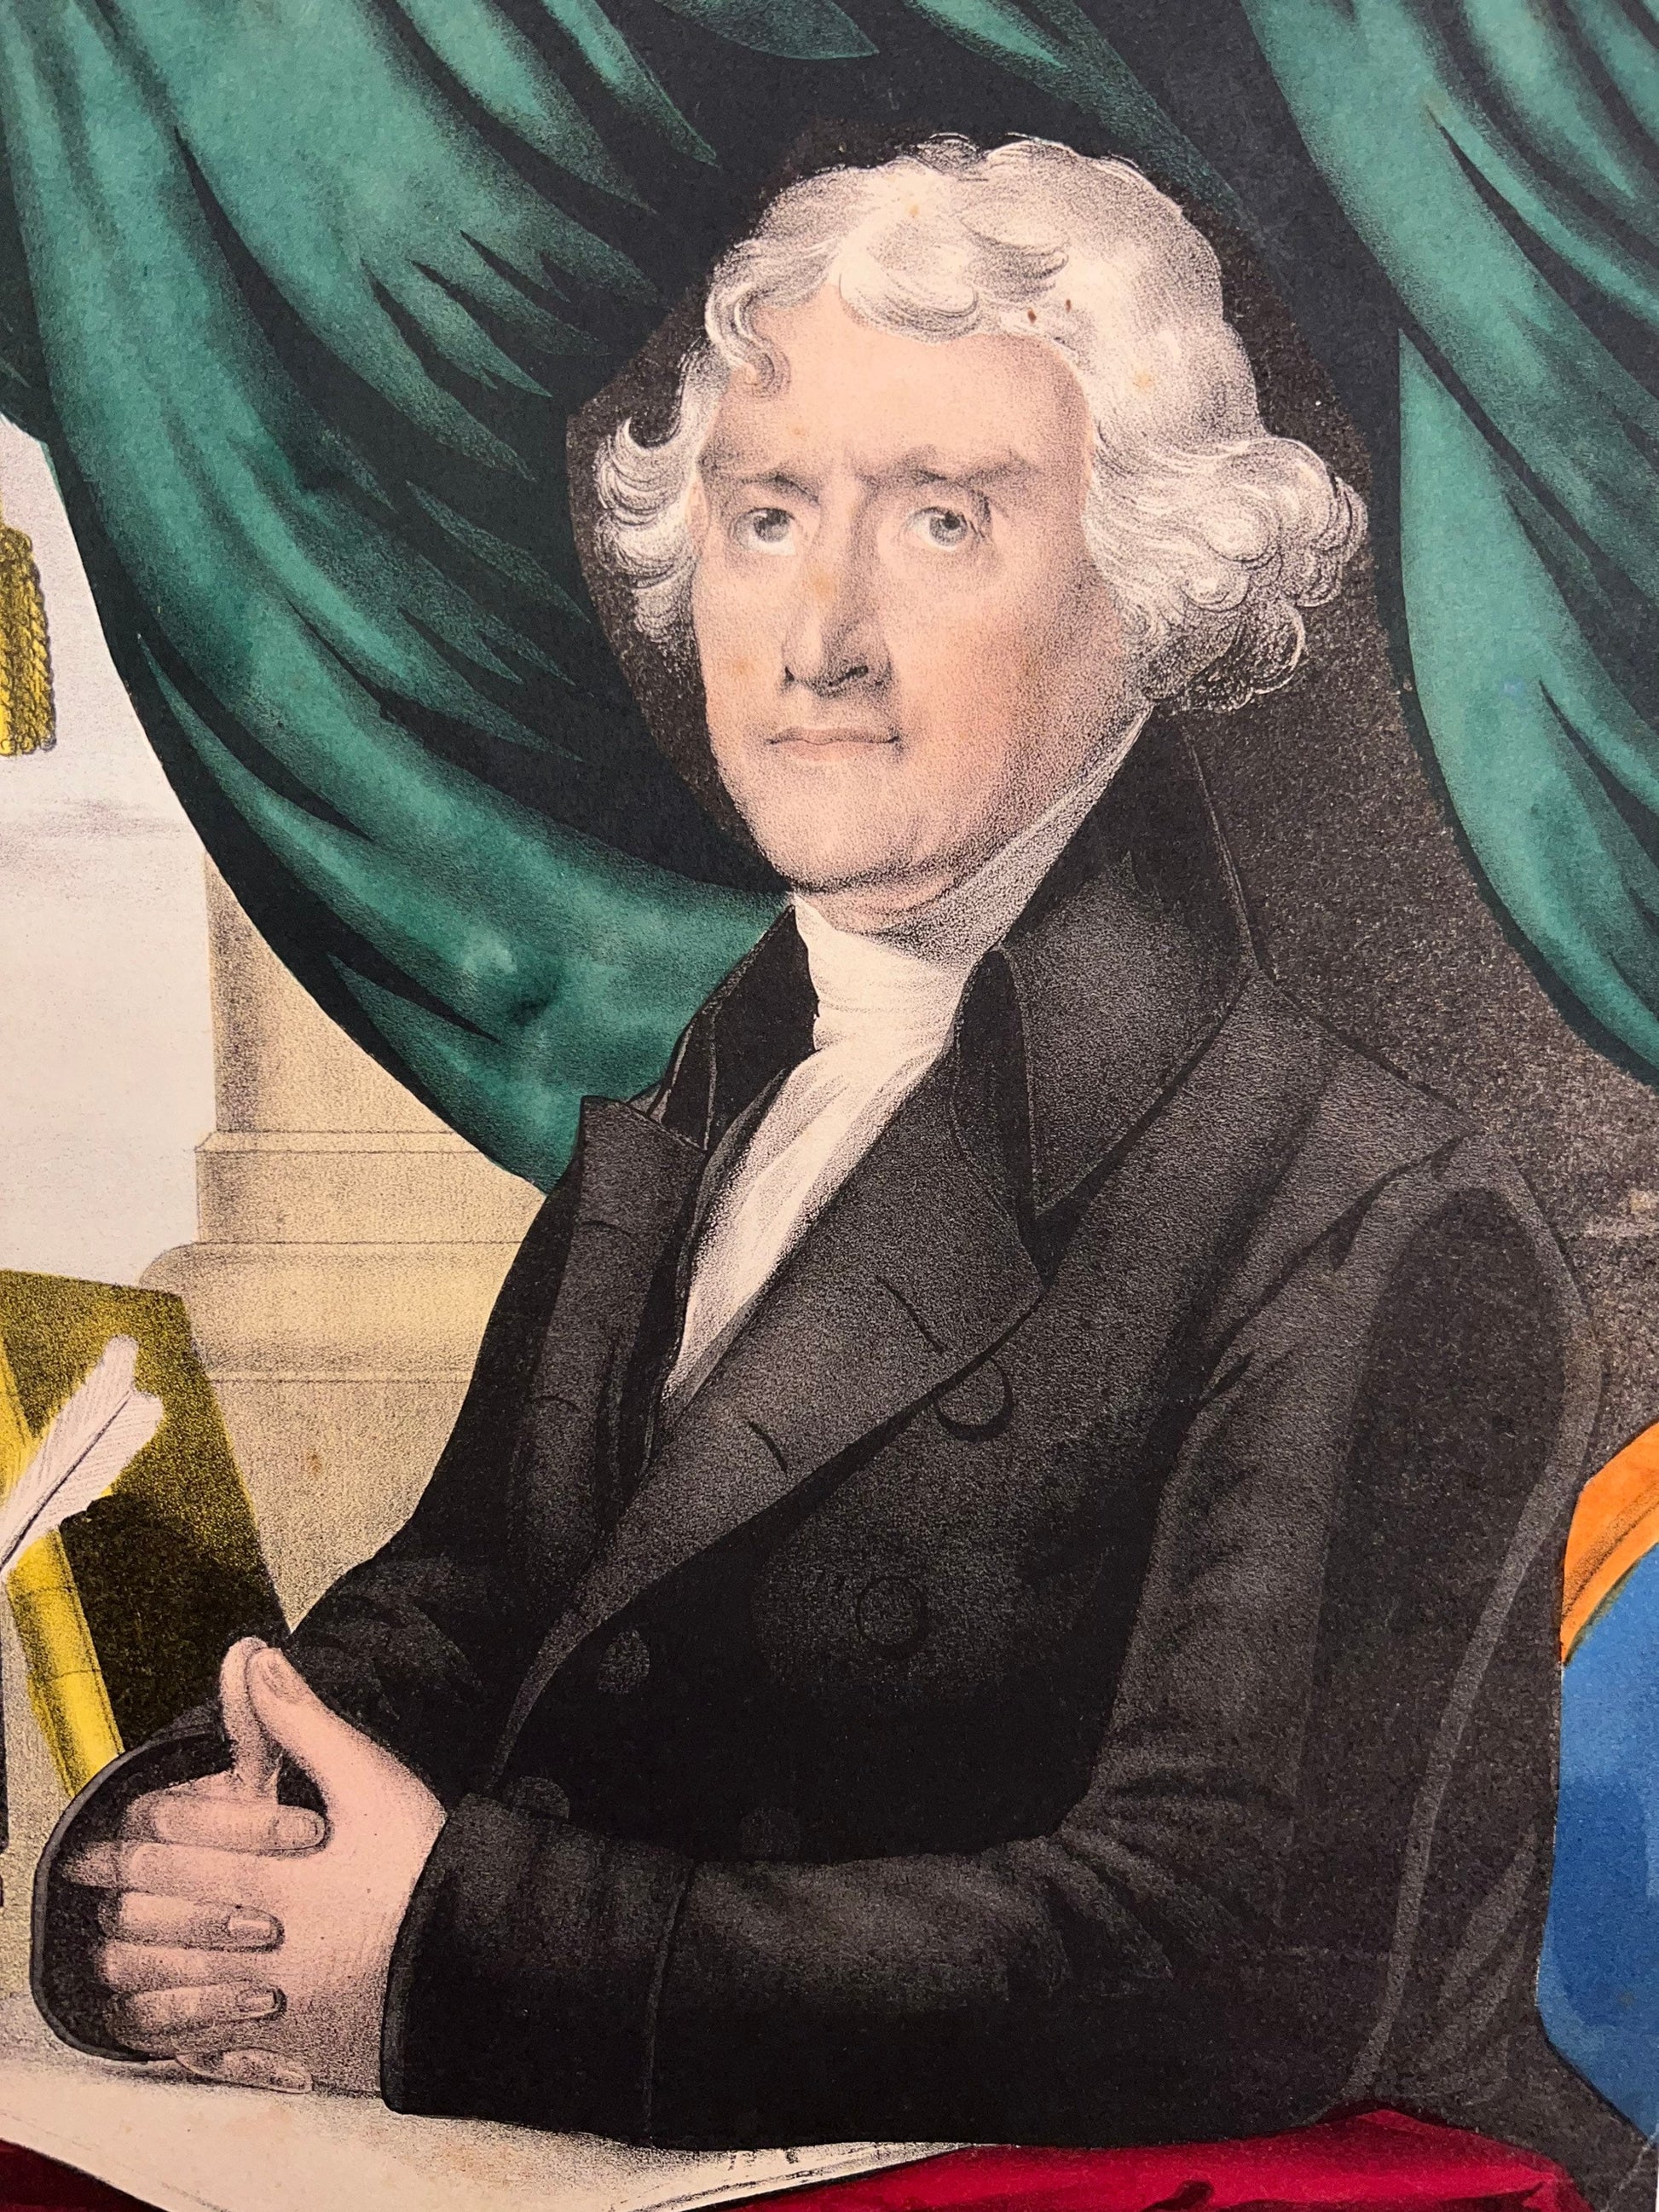 Antique engraving hand colored Thomas Jefferson b.& e.c Kellogg 1850s founding father president